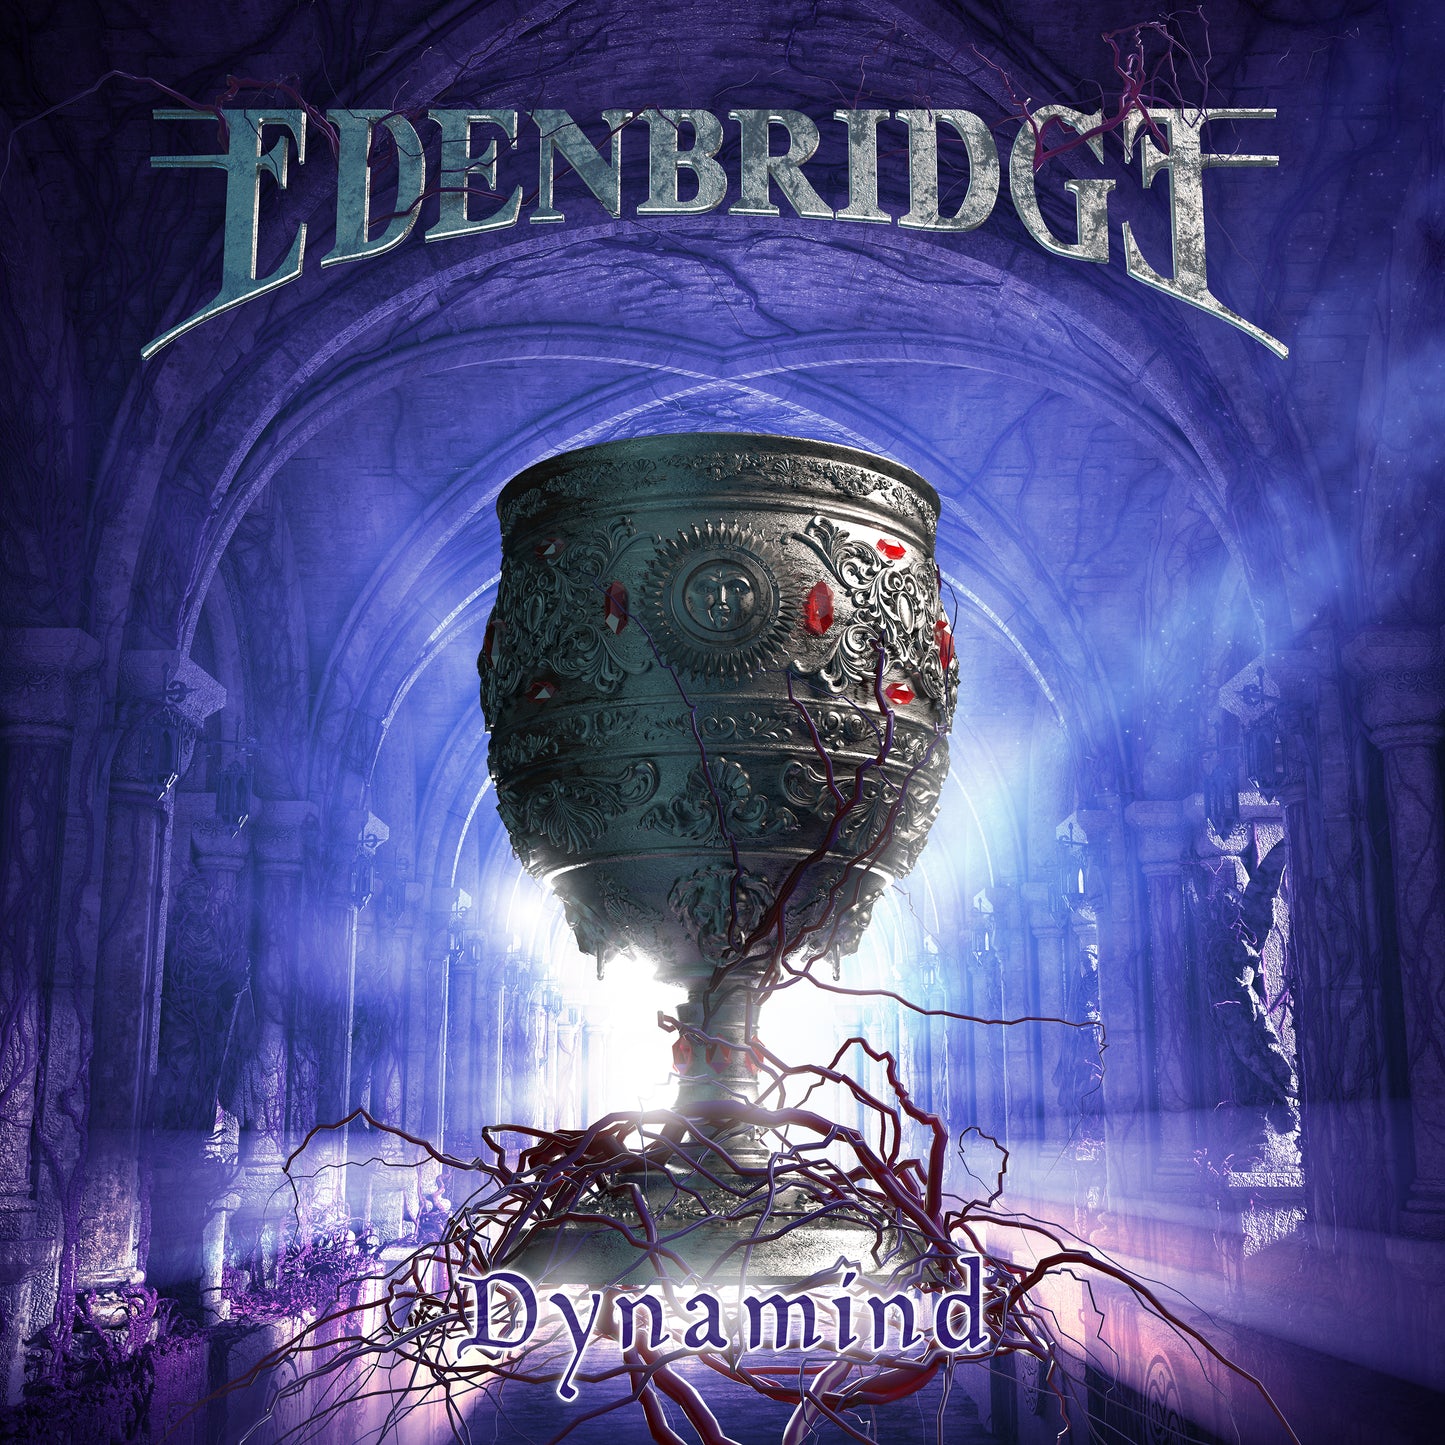 Edenbridge "Dynamind" LP